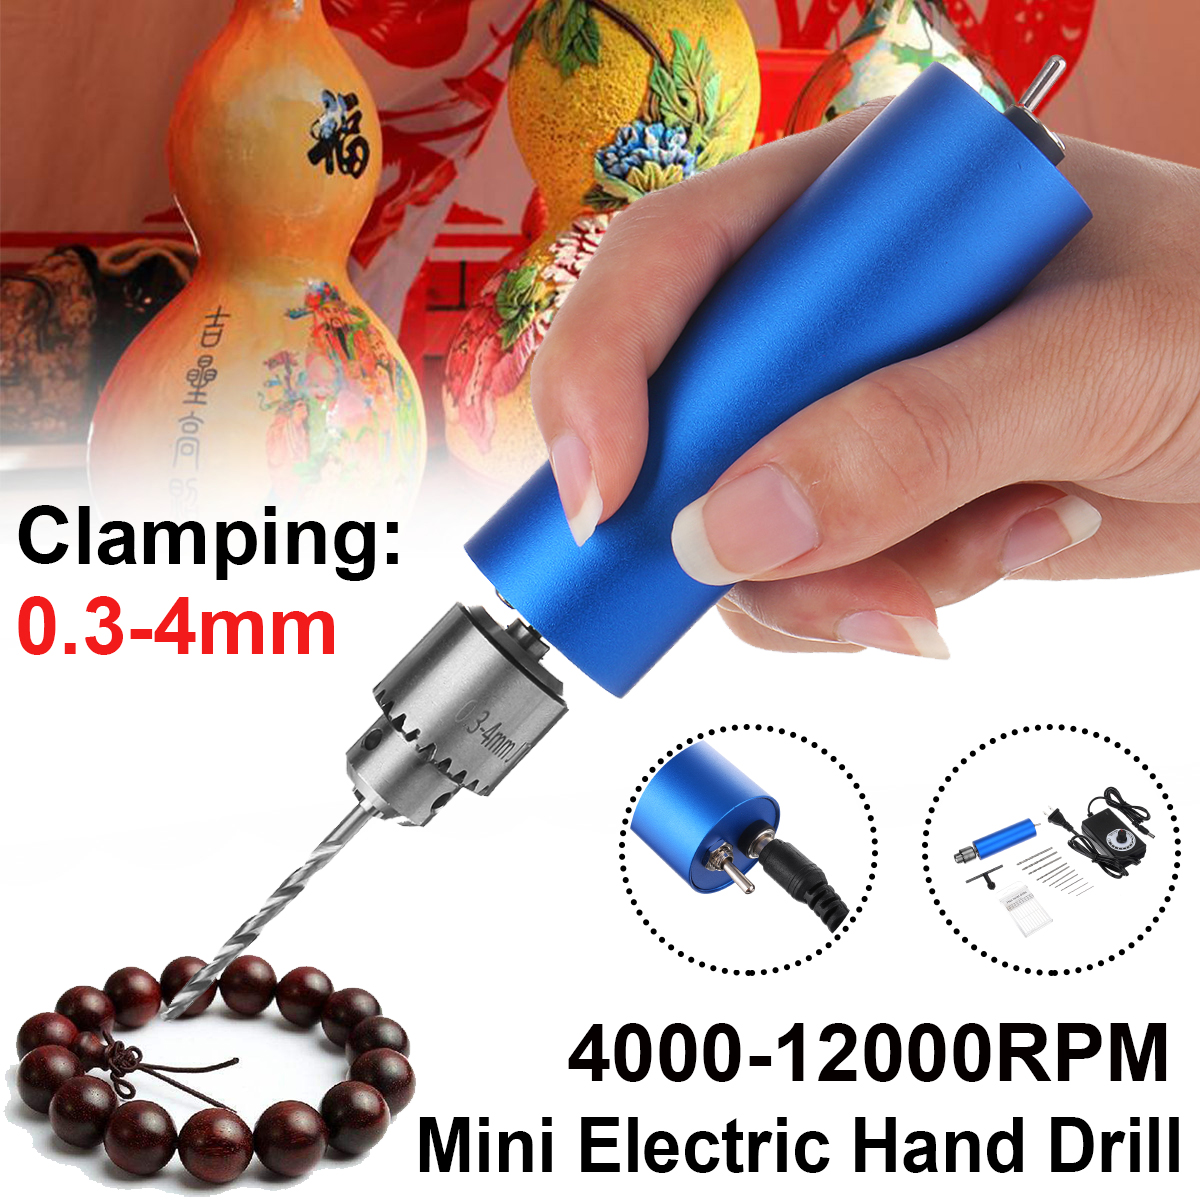 Mini-Electric-Hand-Drill-Grinding-Polishing-Tool-with-DIY-385-Ball-Bearing-Motor-Clamping-03-4mm-1760090-1